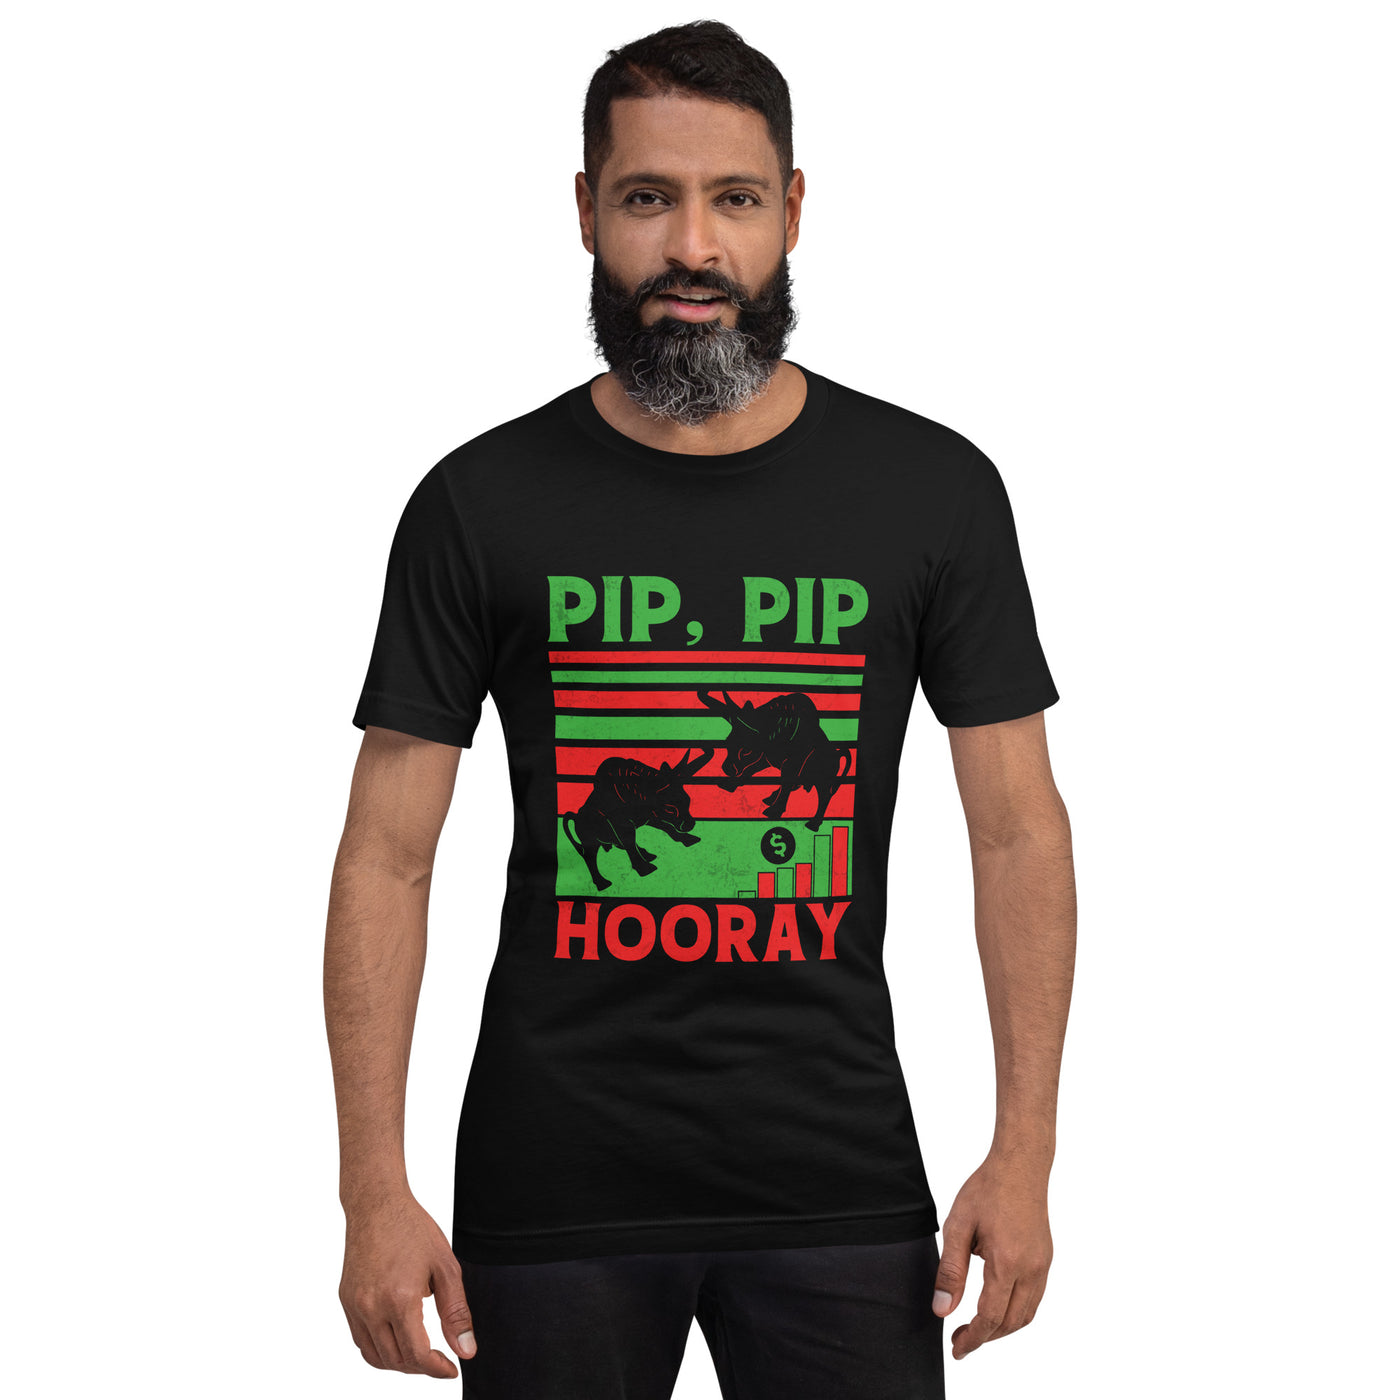 Pip, Pip Hooray - Unisex t-shirt